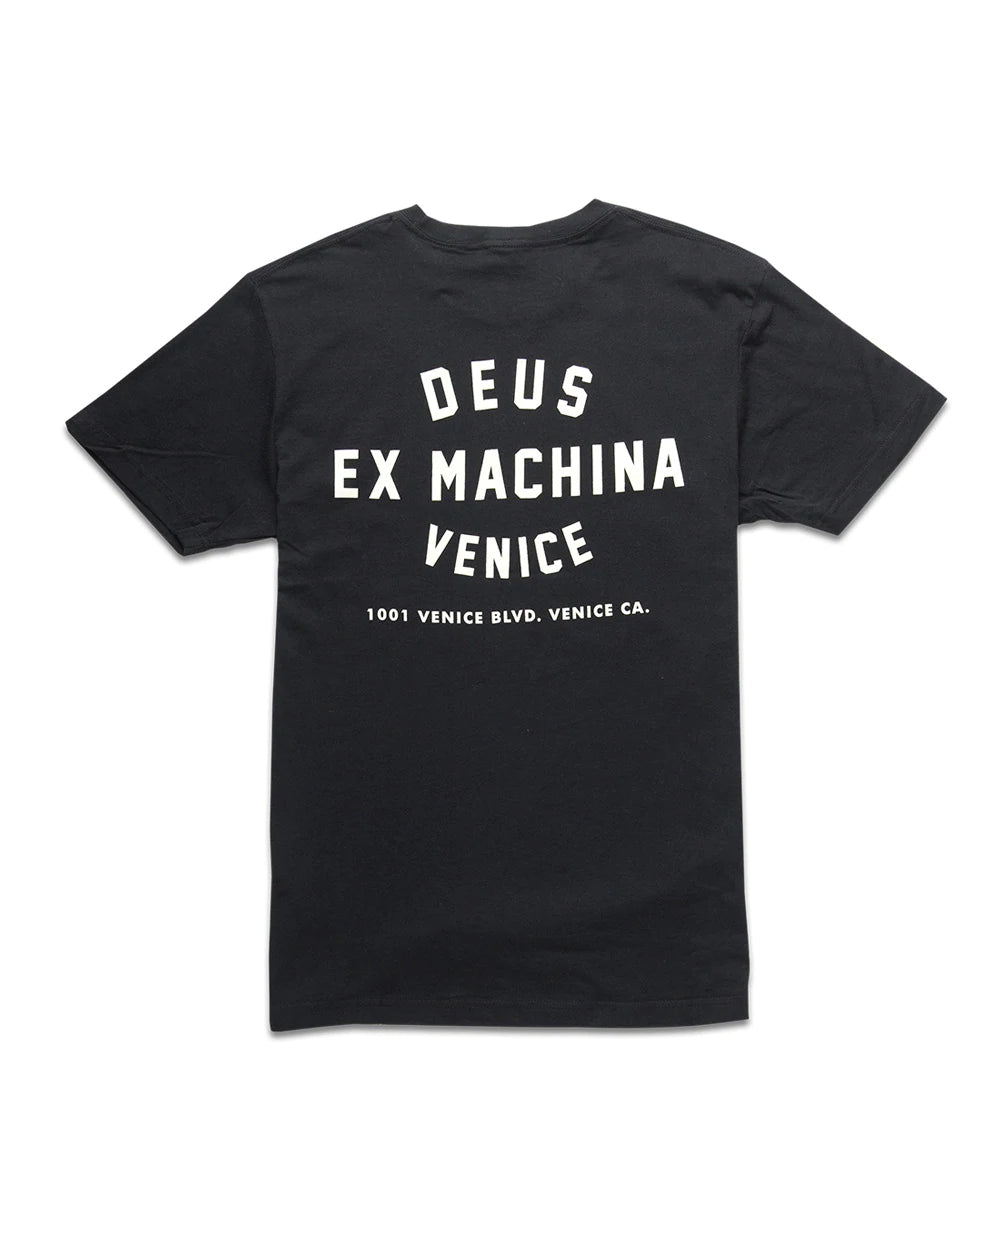 Deus - Venice Skull Tee - Black